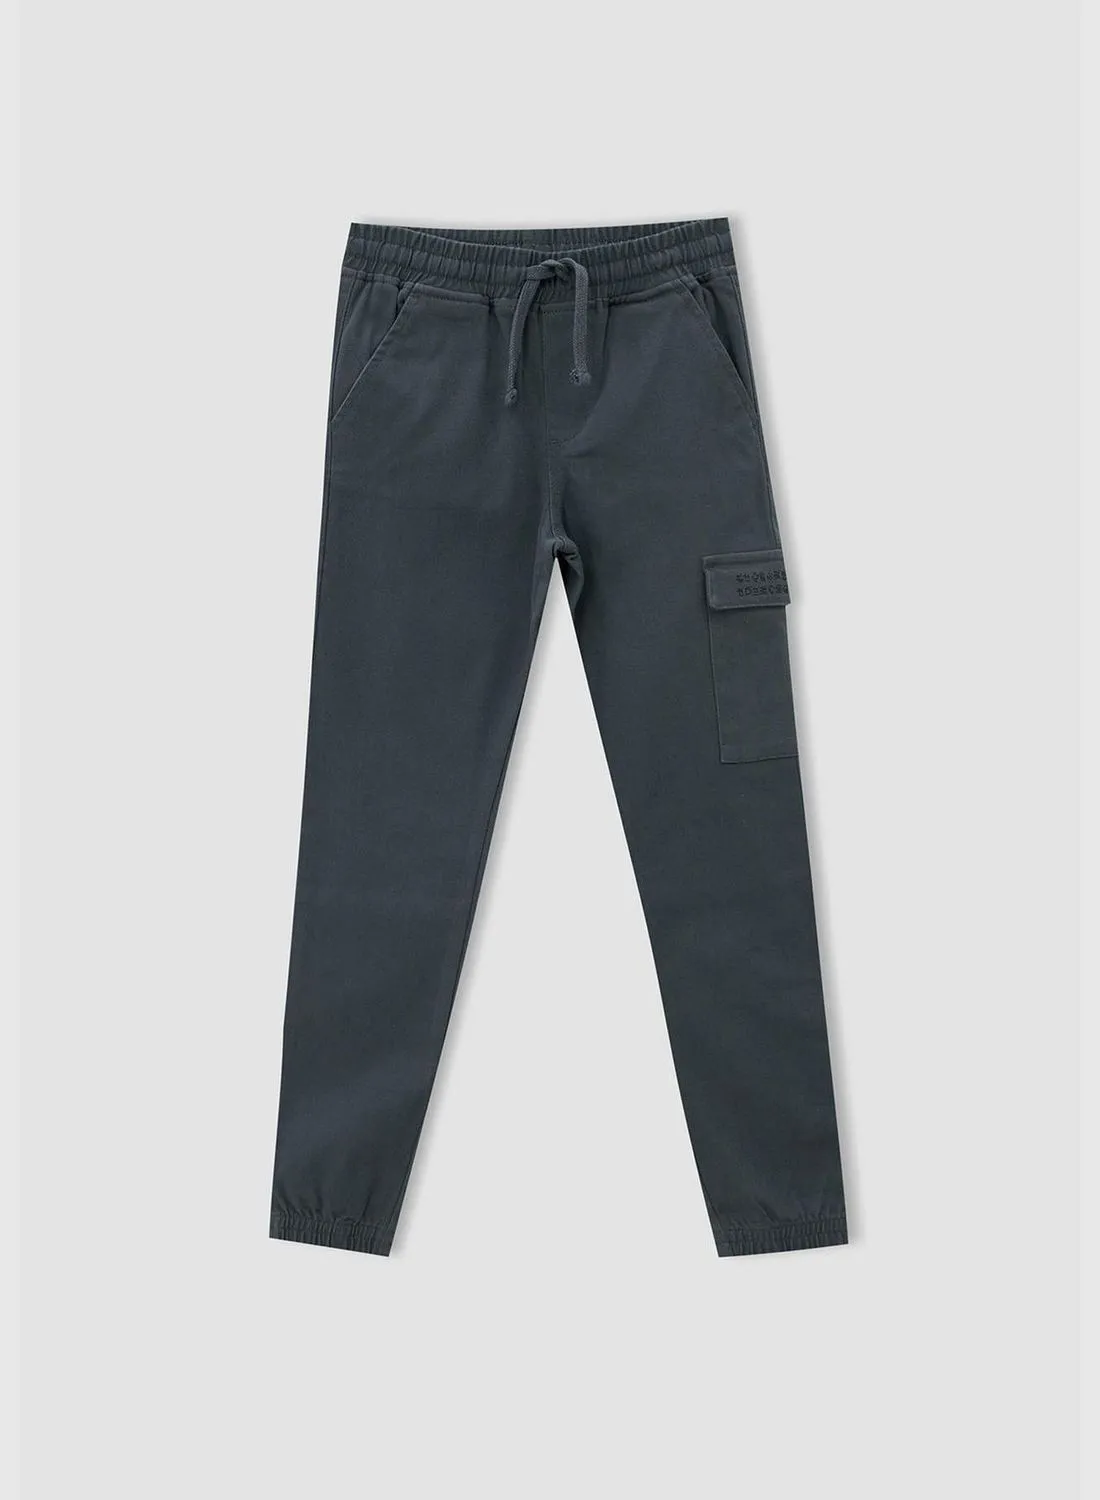 DeFacto Slim Fit Sweatpants with Kangaroo Pockets